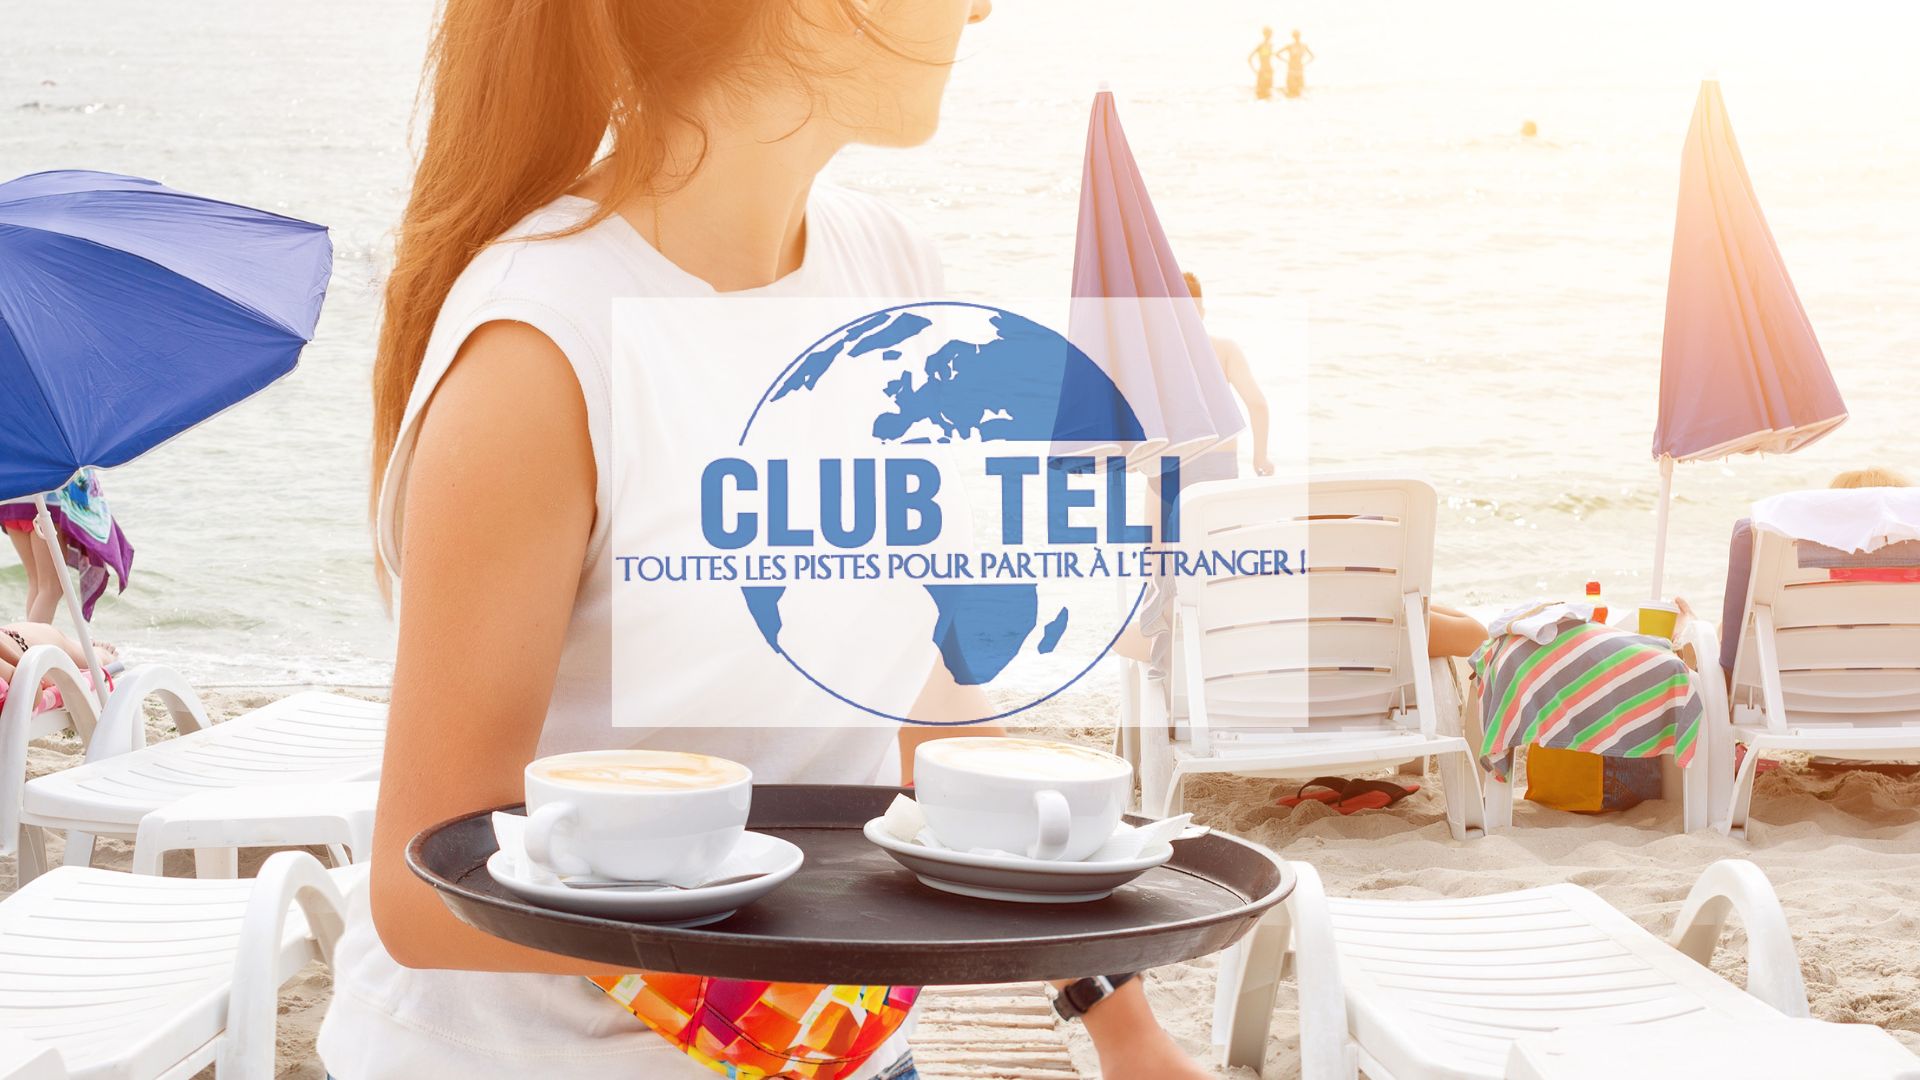 Club Teli